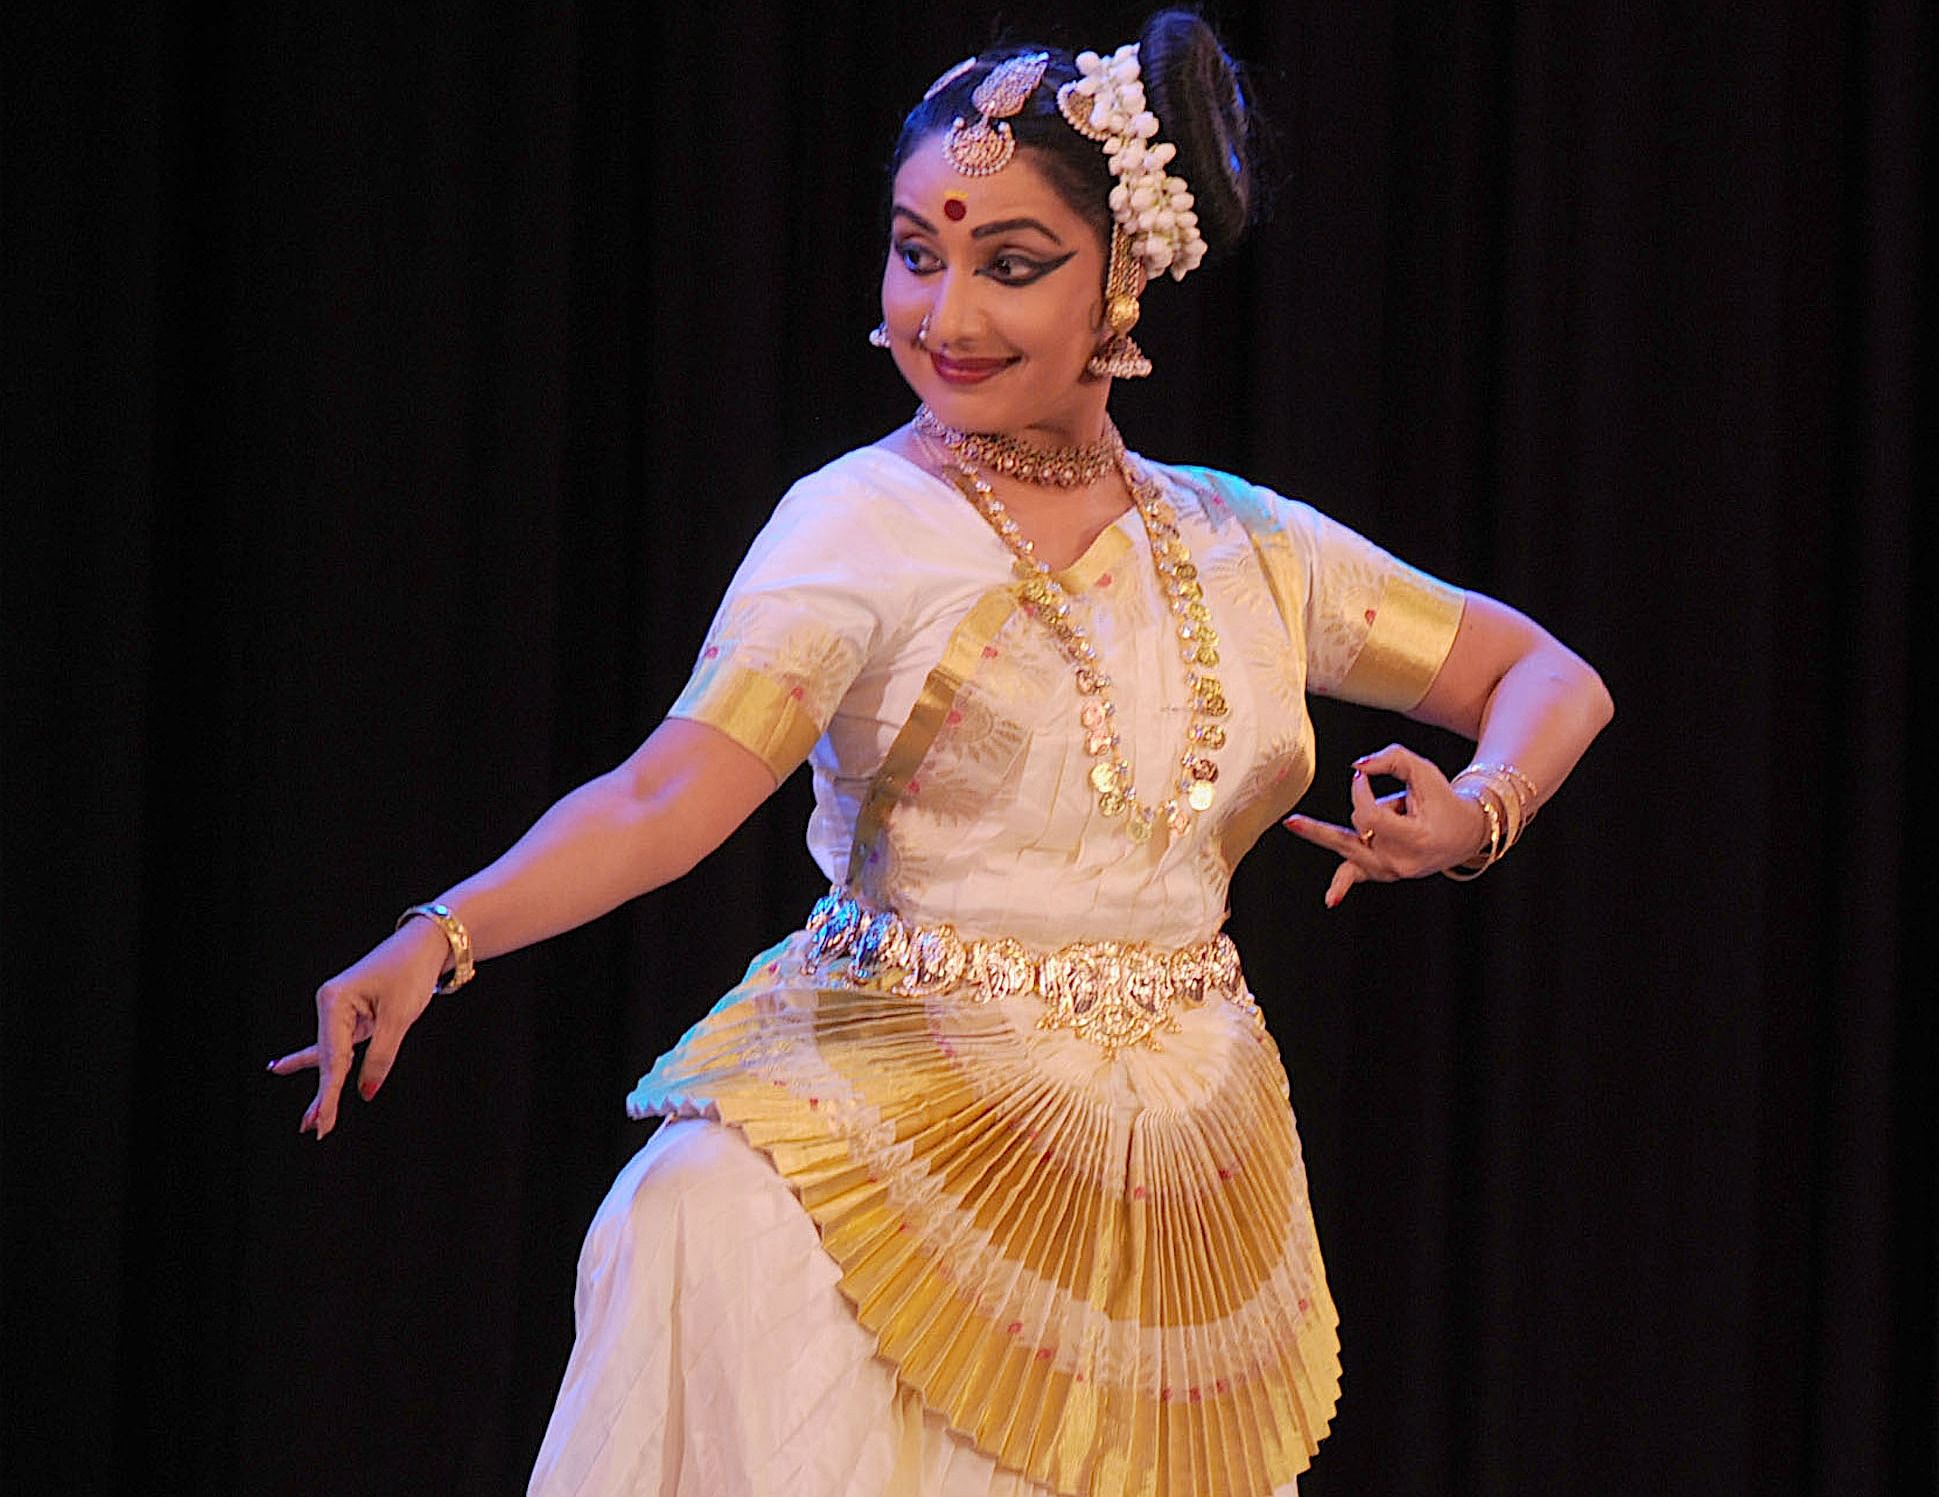 Neena Prasad, during a performance. Credit: DH File Photo